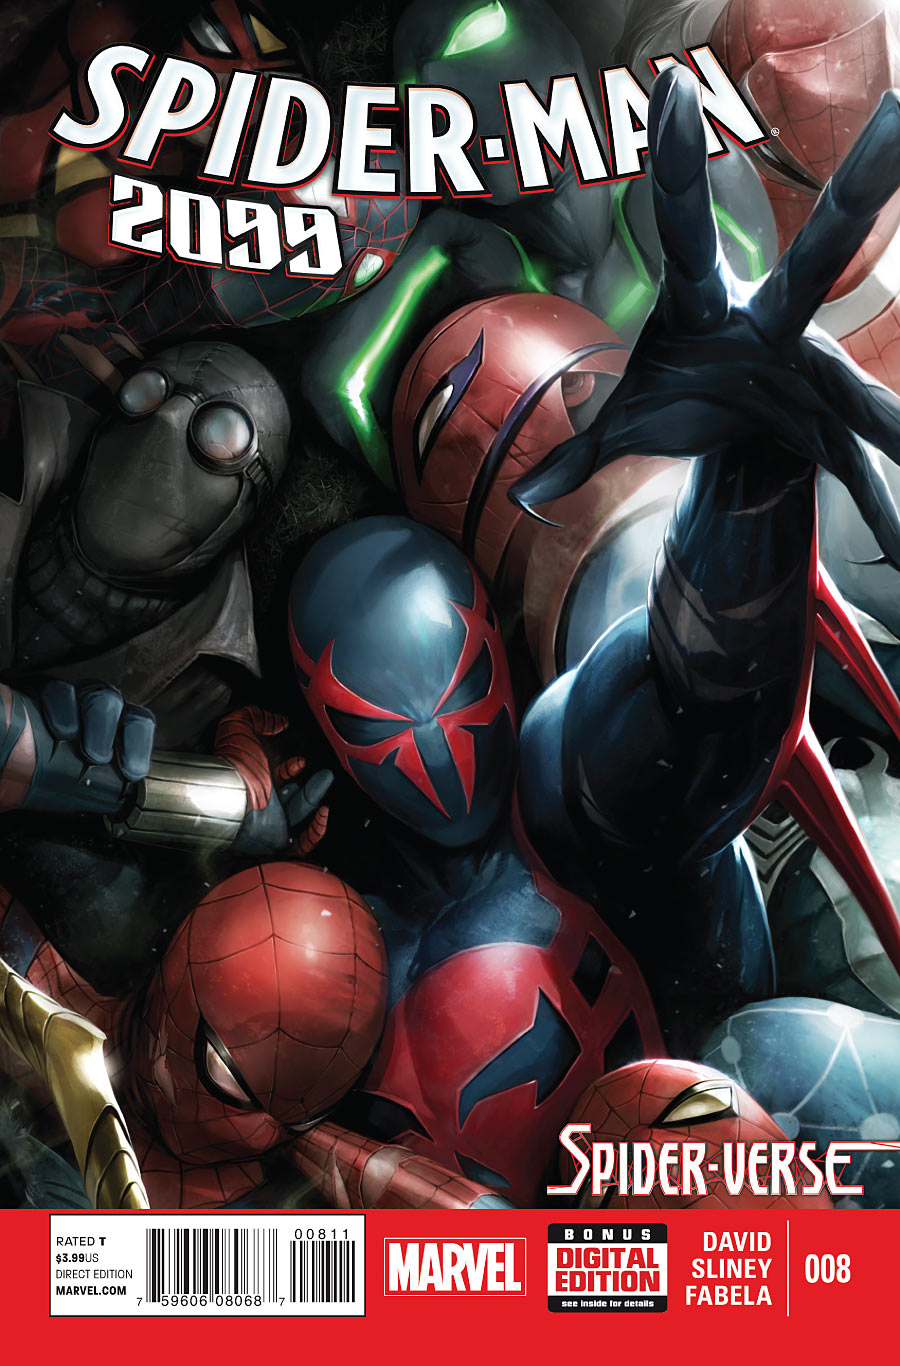 Spider-Man 2099 Vol 2 8, Marvel Database